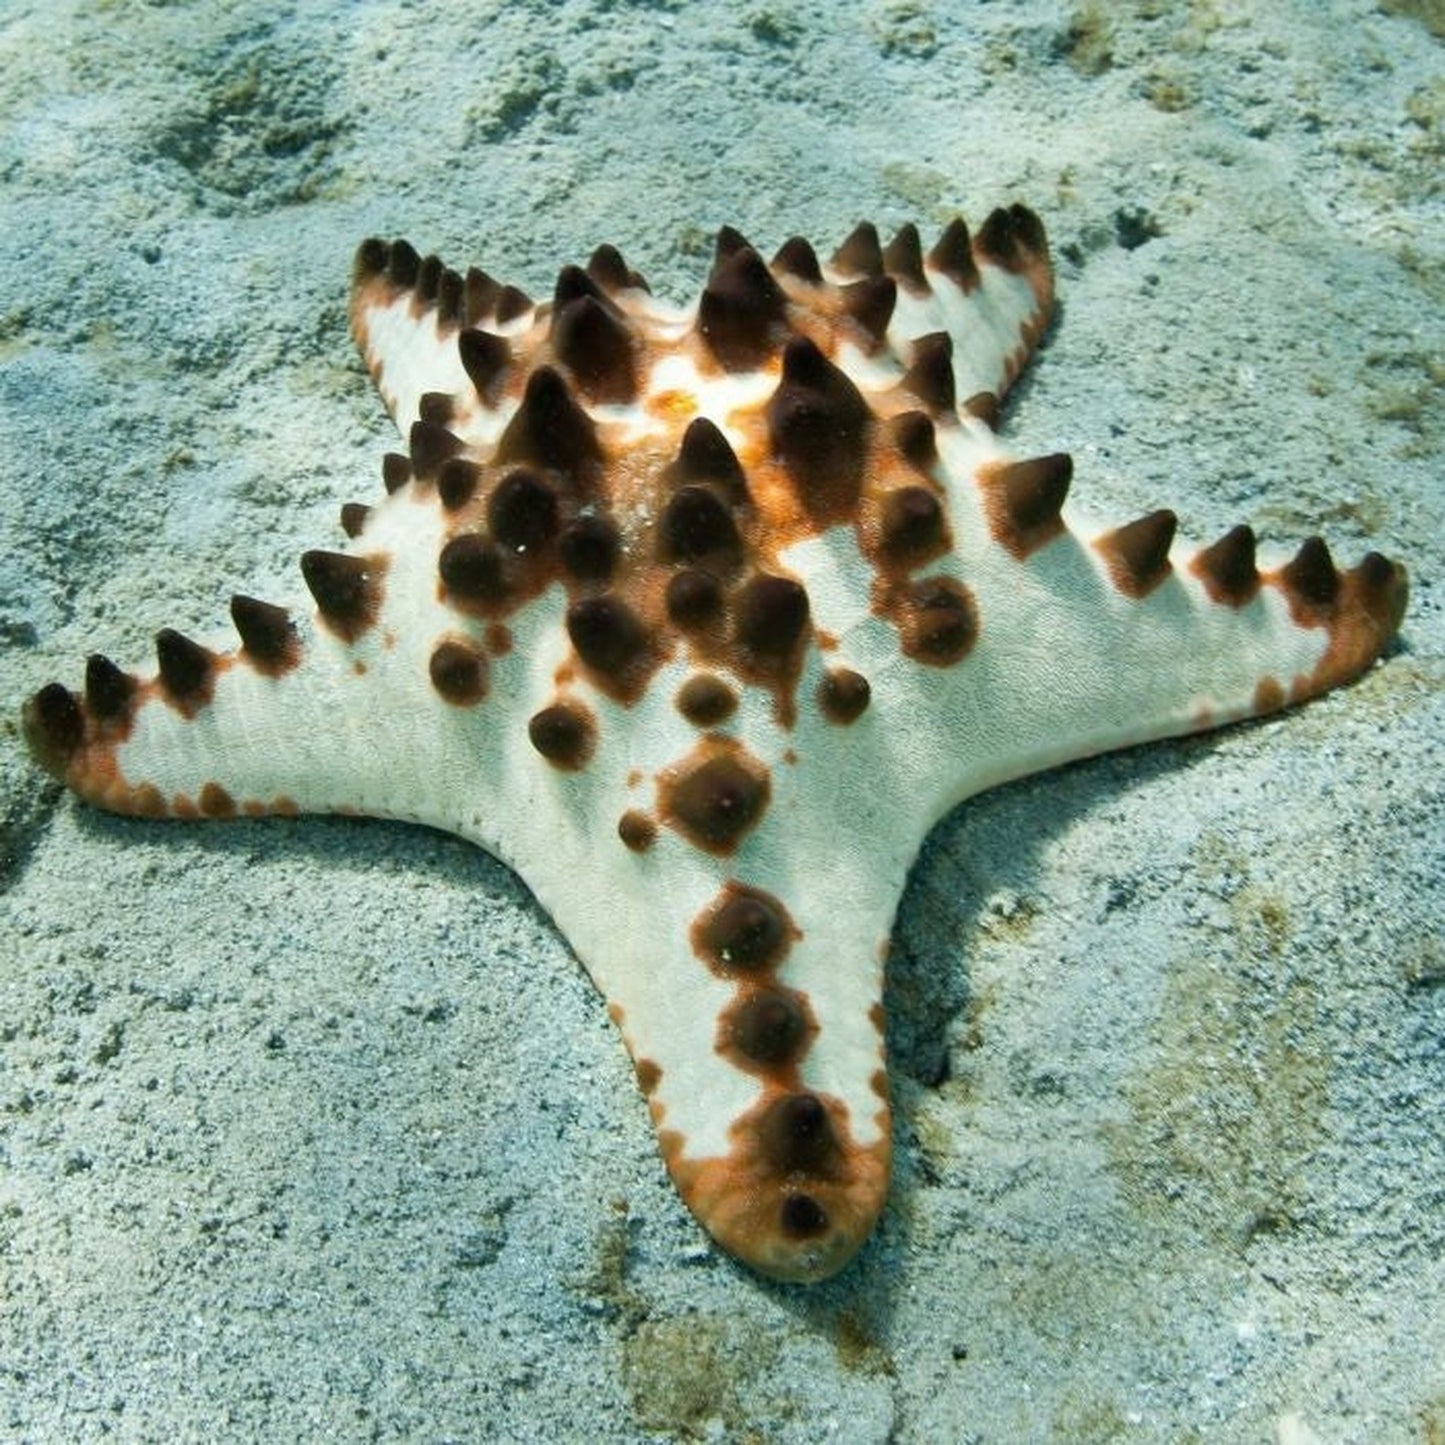 Chocolate Chip Starfish (Protoreaster nodosus)